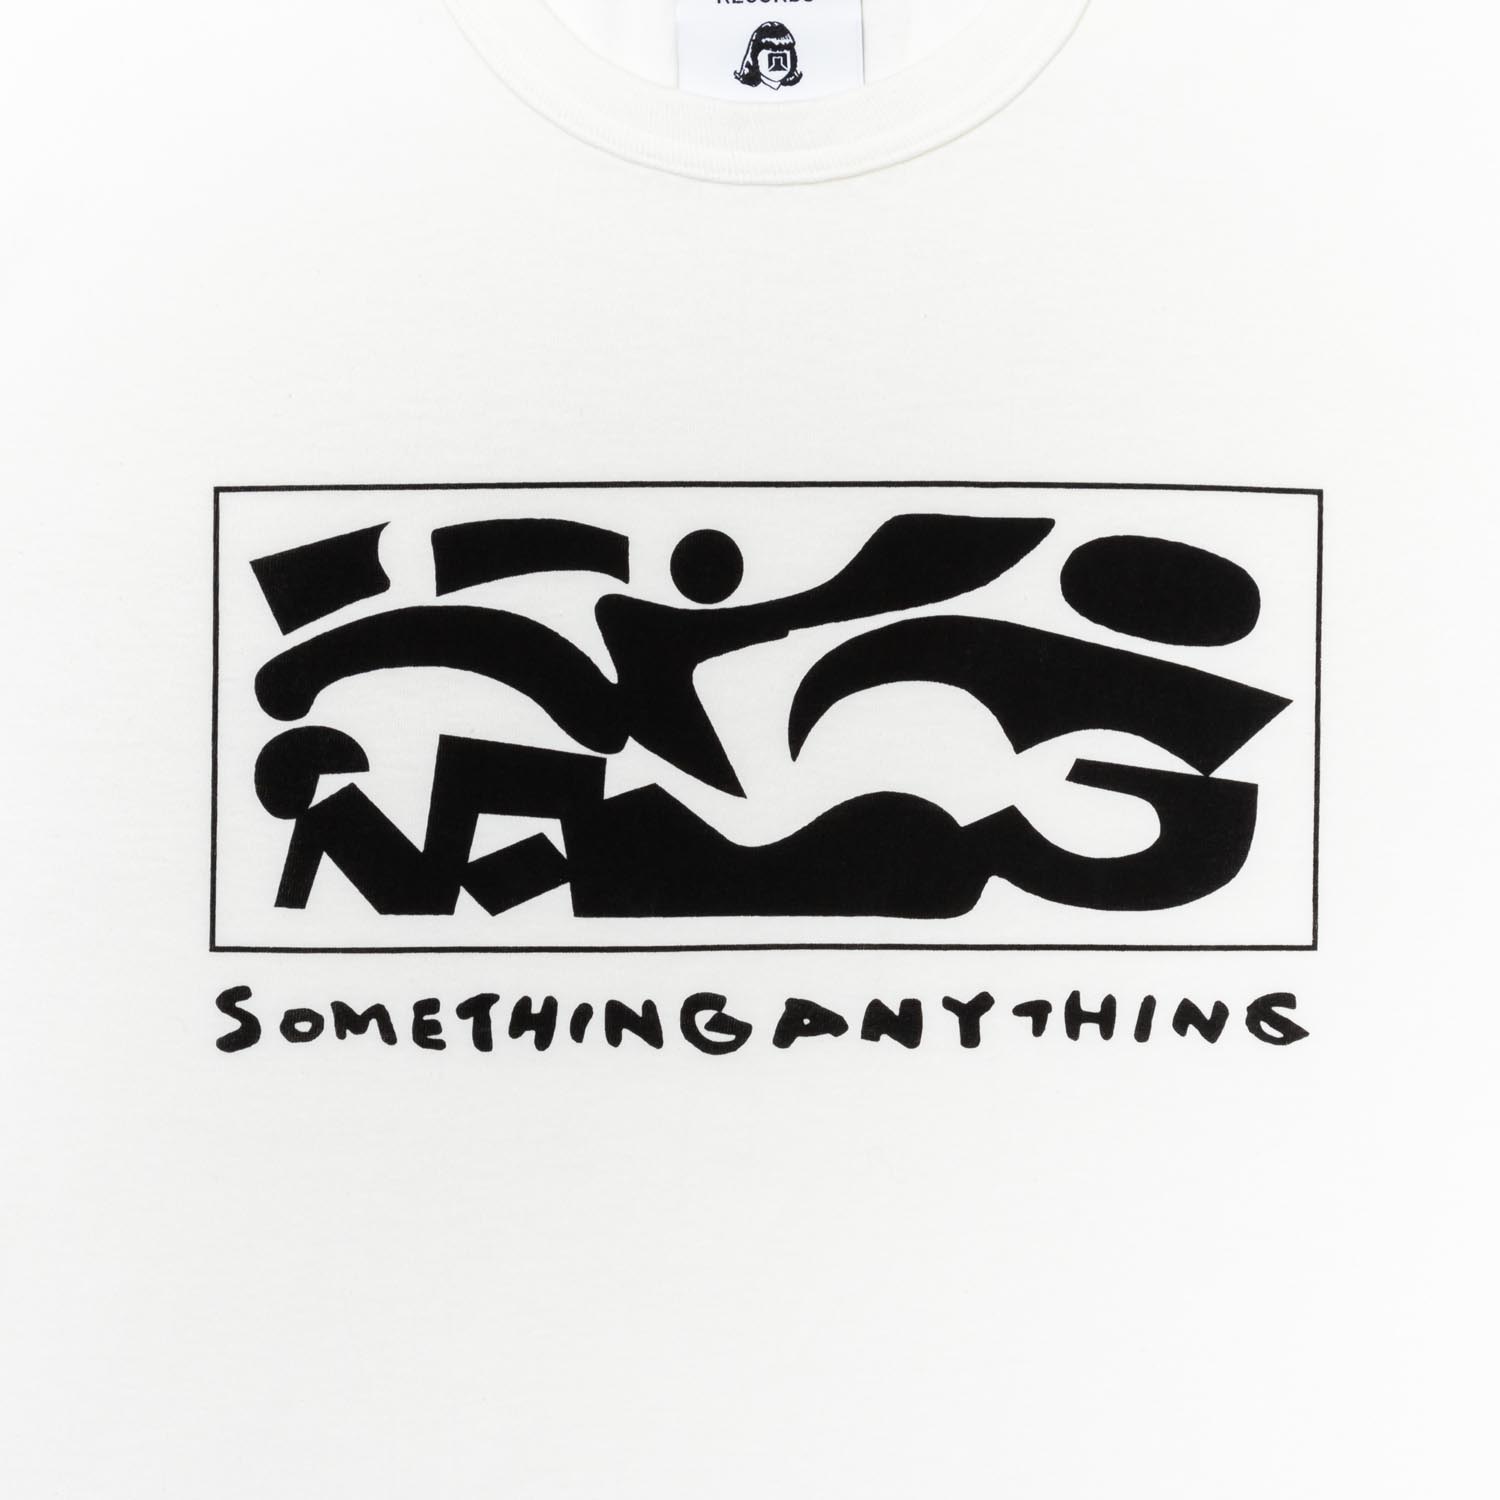 SOMETHING / ANYTHING designed by Yutaka Kawai